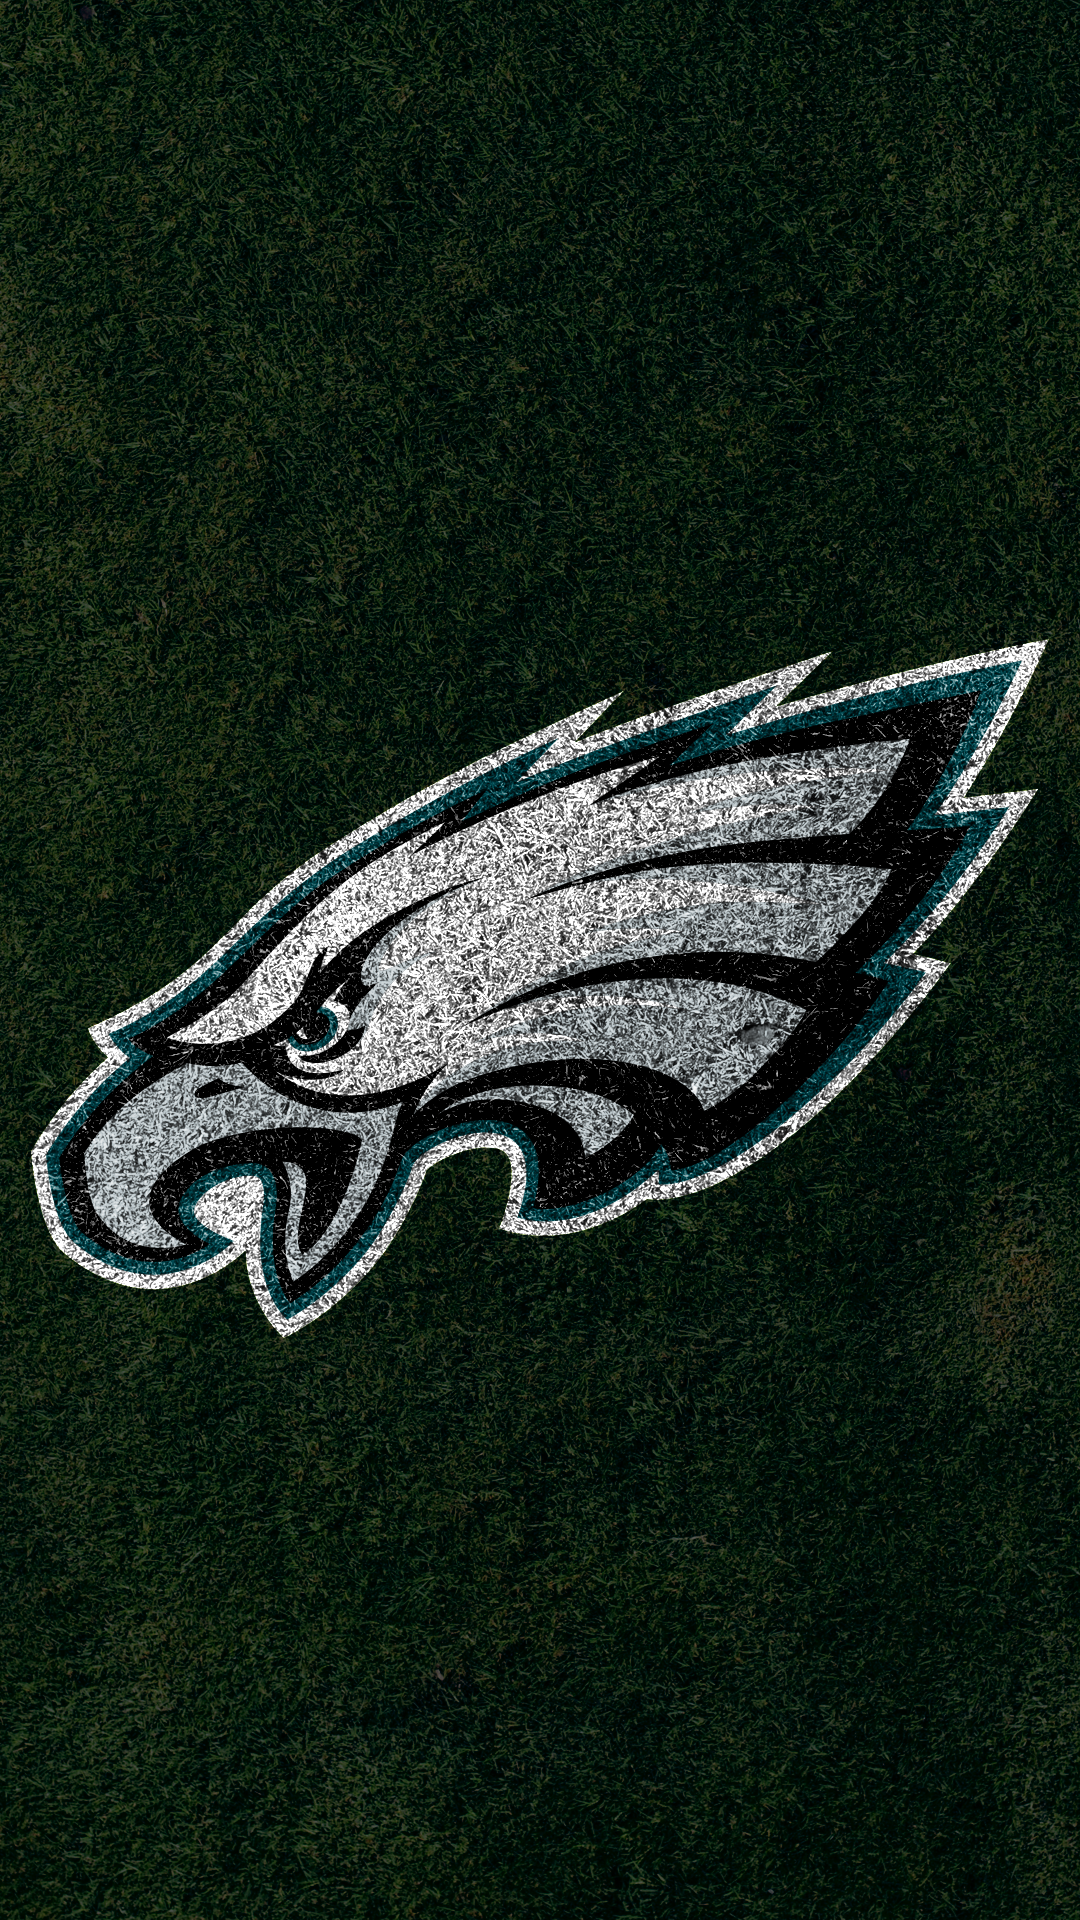 Philadelphia Eagles Wallpaper And Background Image